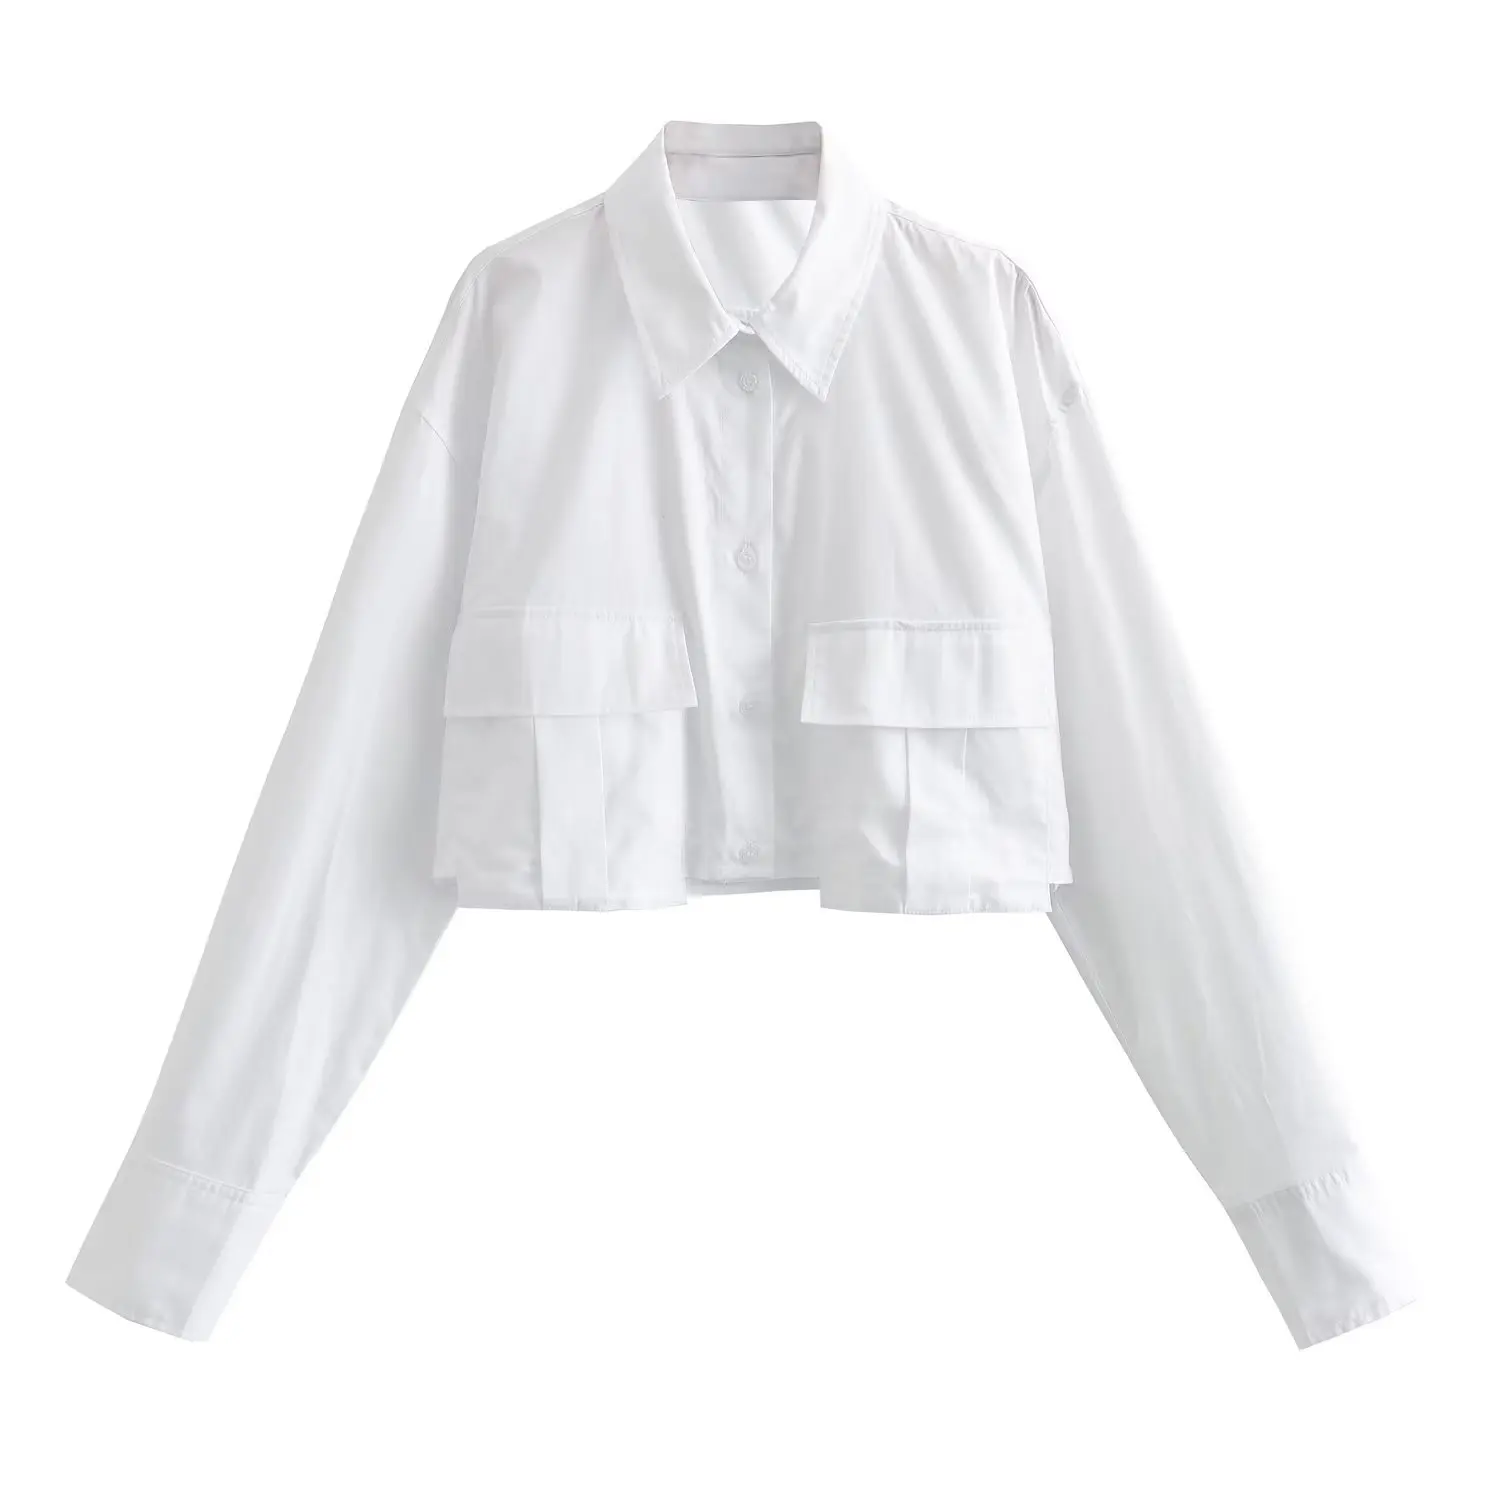 Maxdutti Fashion Solid Blouse Long Sleeve Shirt High Street Sexy Short Shirt Pocket Casual for Women